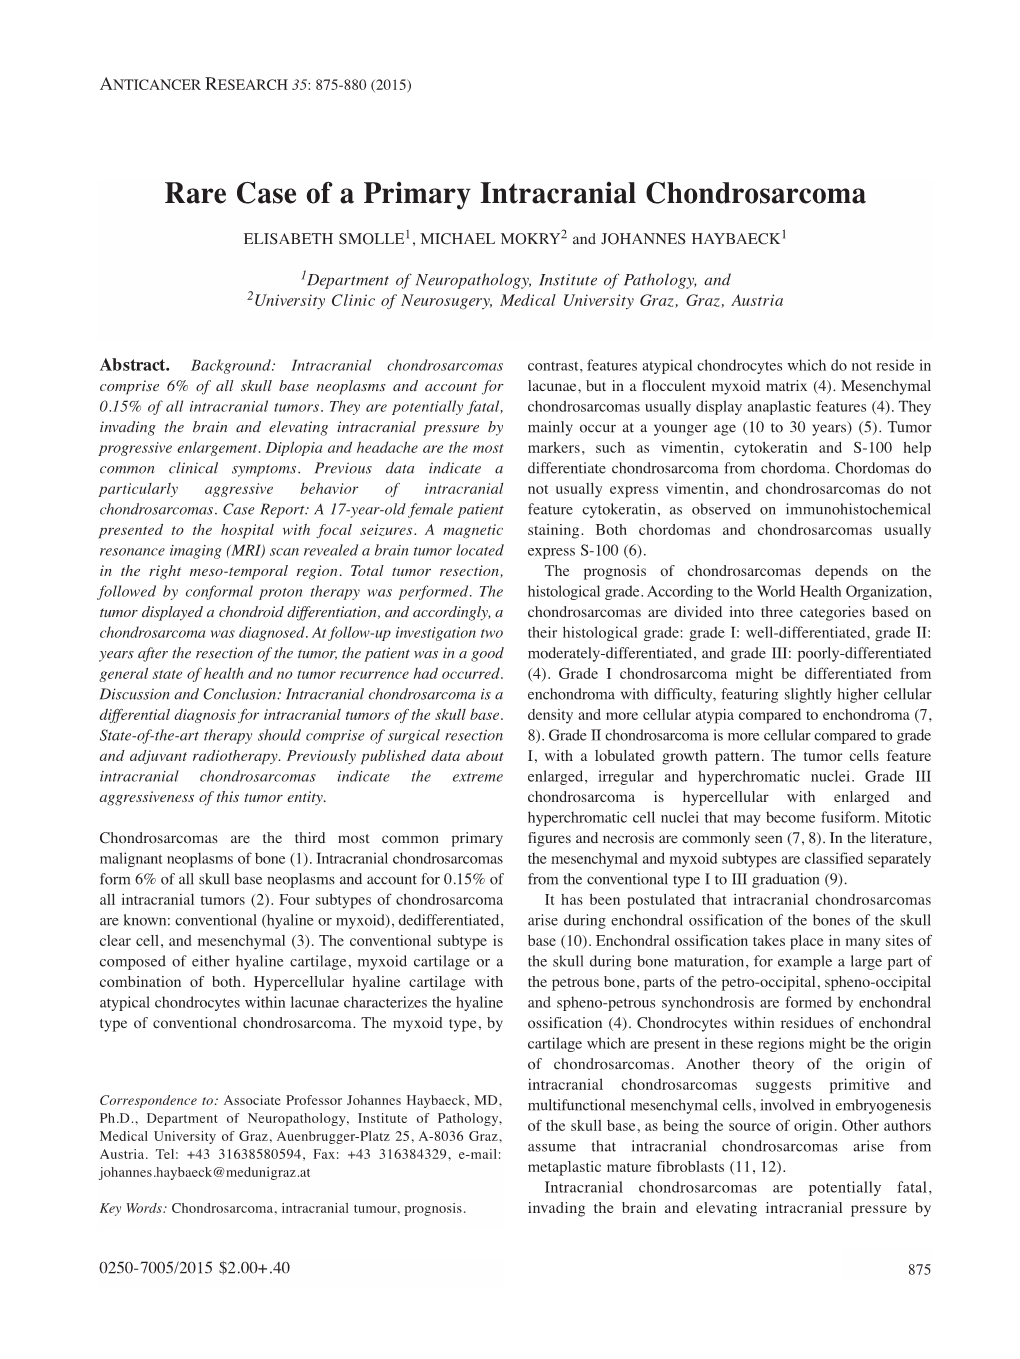 Rare Case of a Primary Intracranial Chondrosarcoma